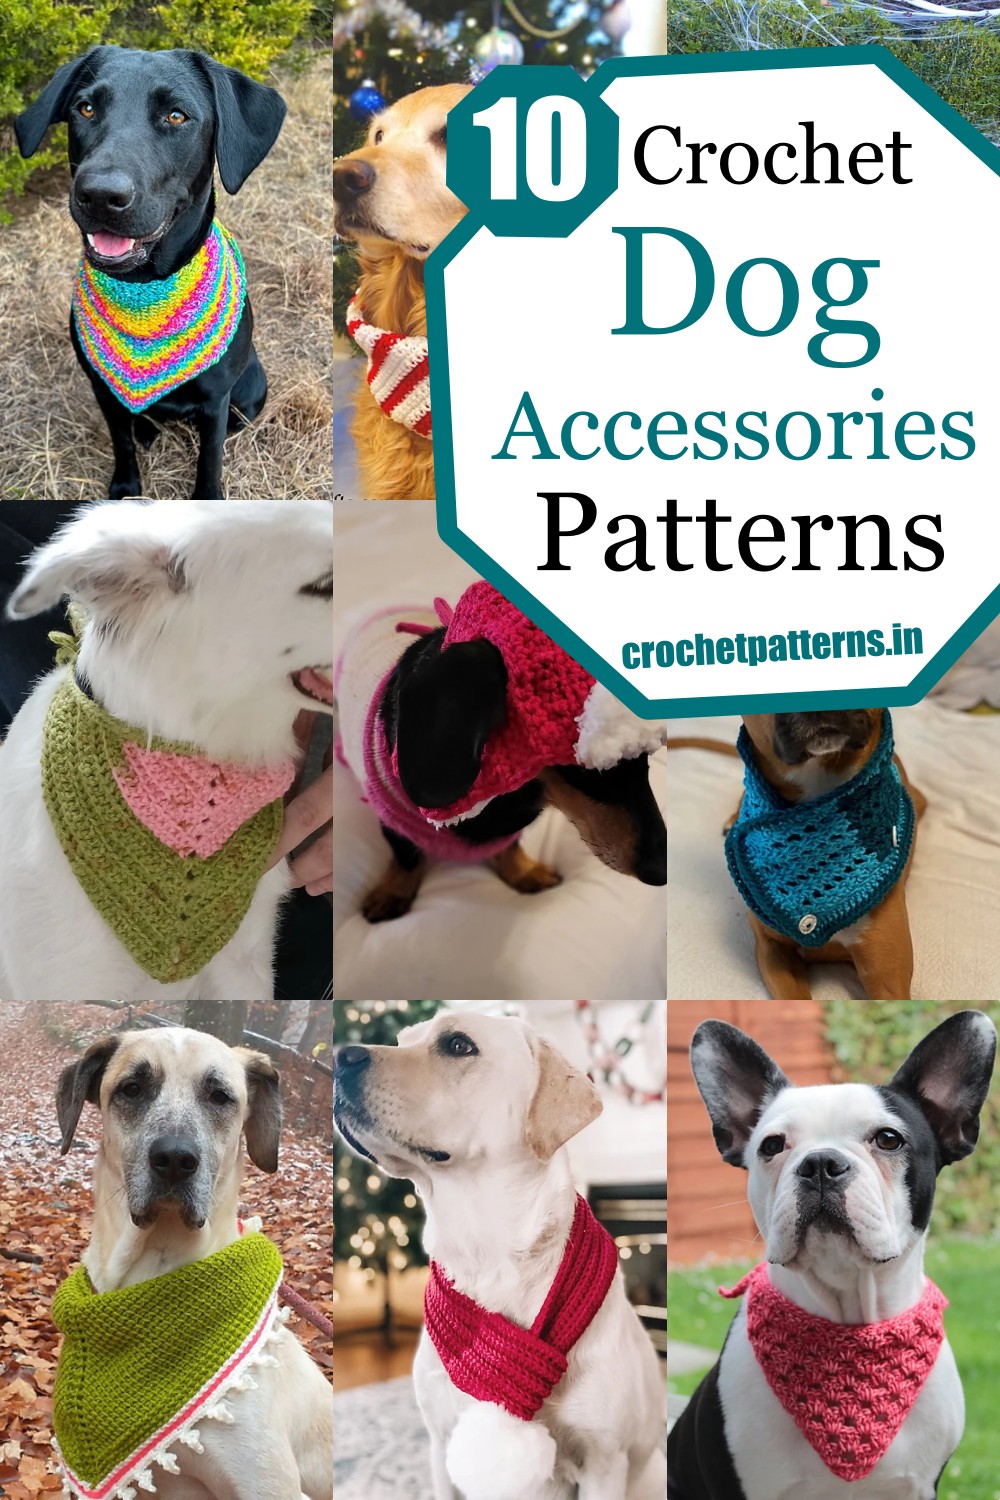 10 Crochet Dog Accessories Patterns